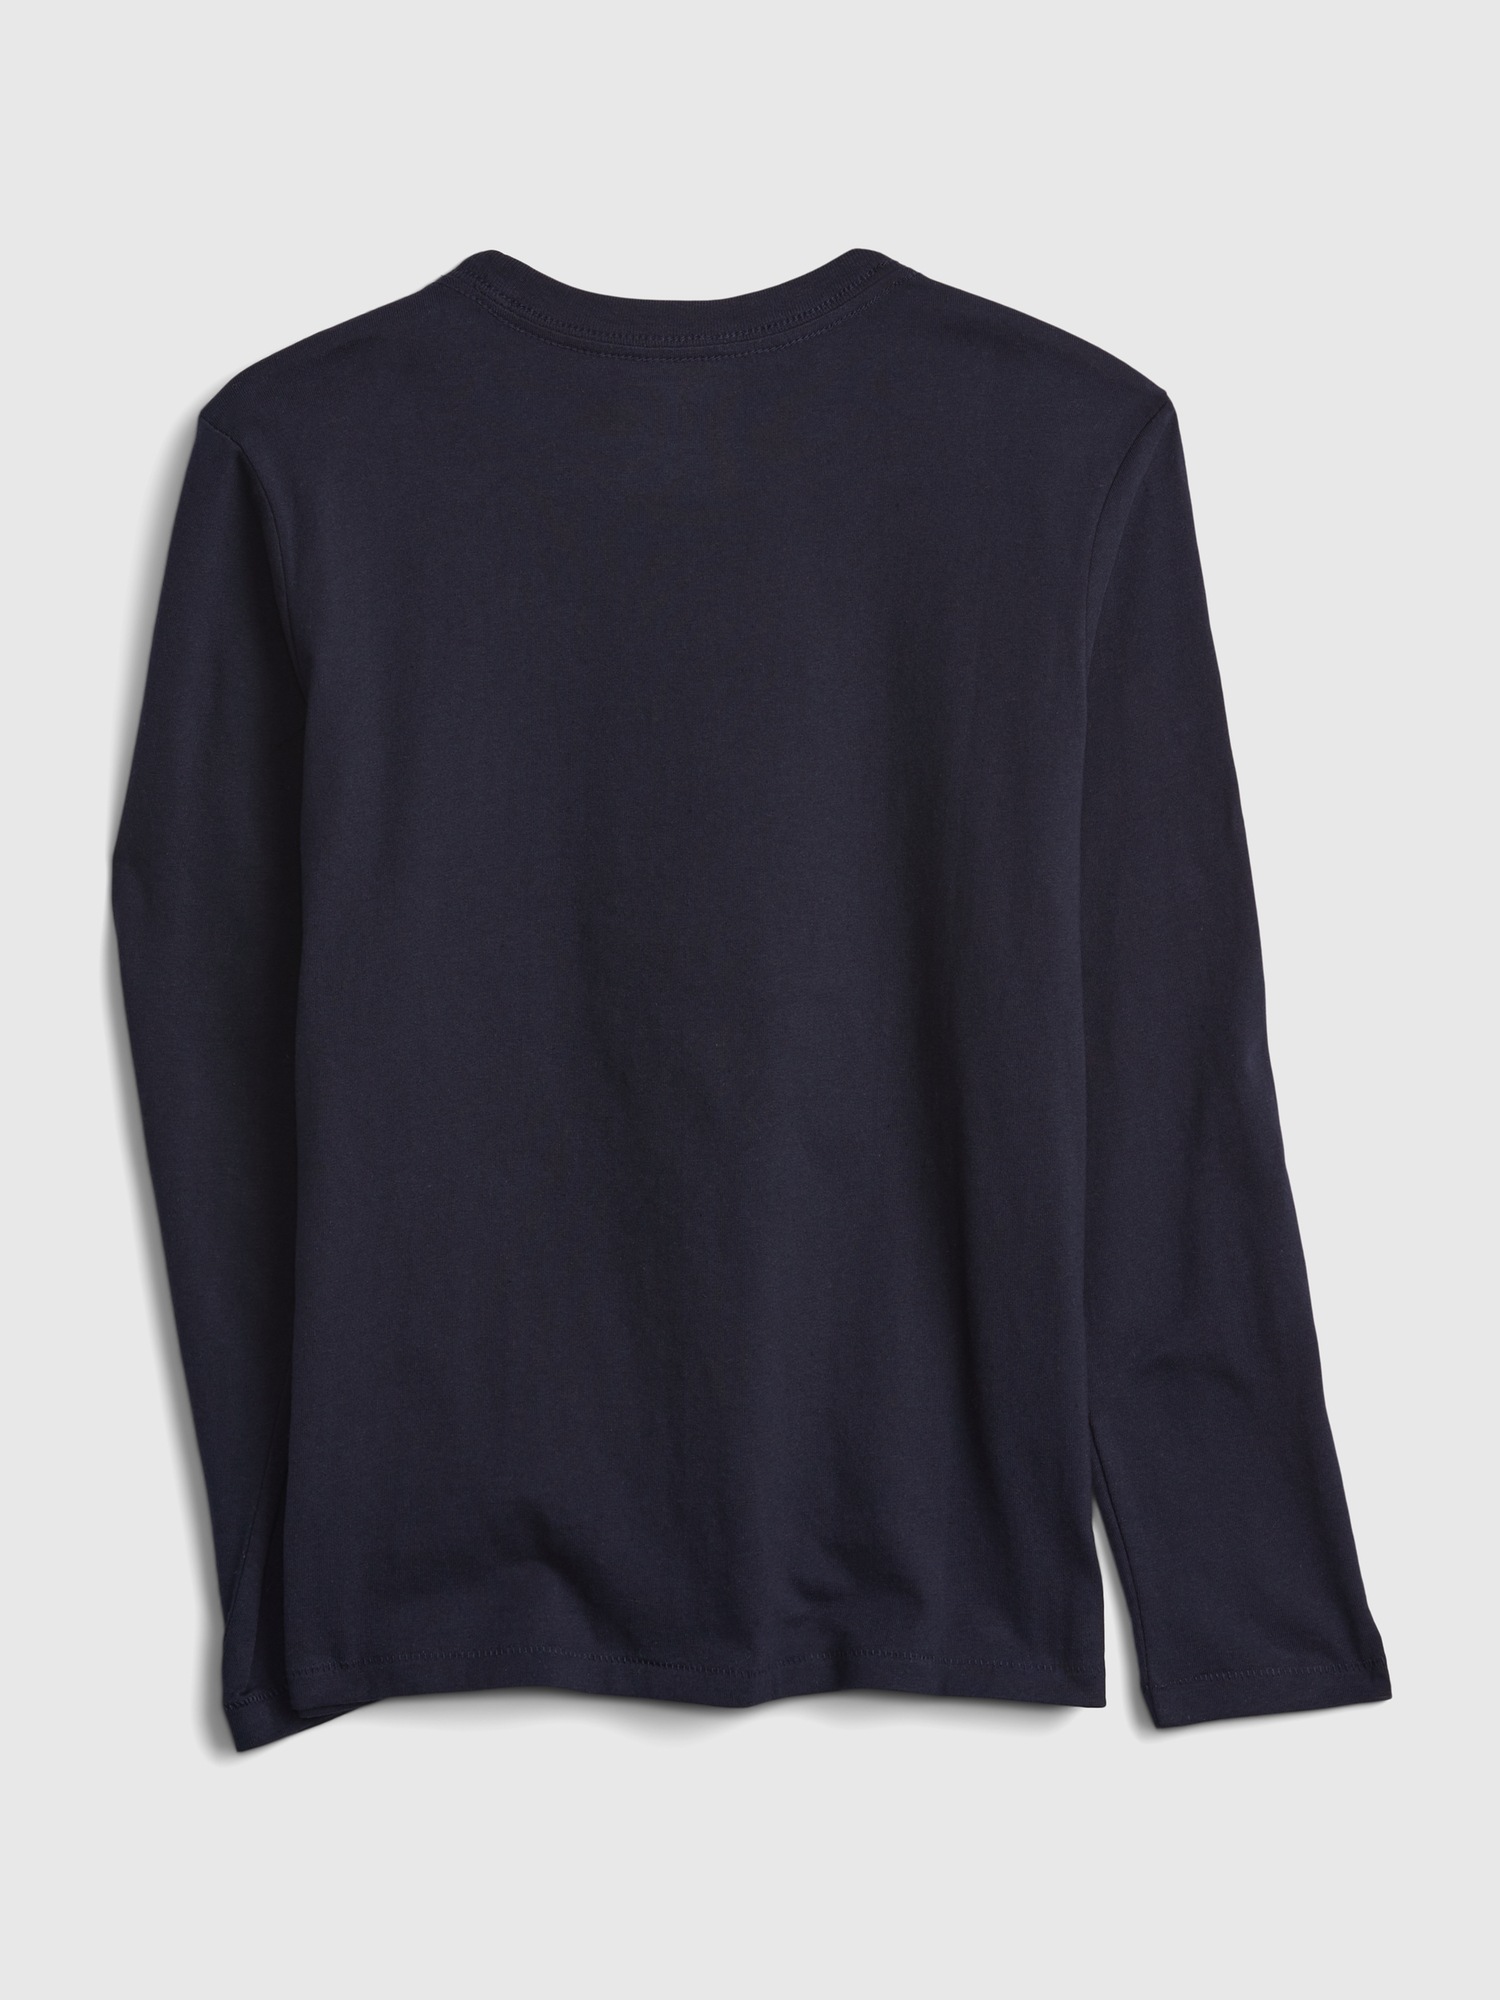 GapKids | Home Alone 100% Organic Cotton Long Sleeve Graphic T-Shirt | Gap